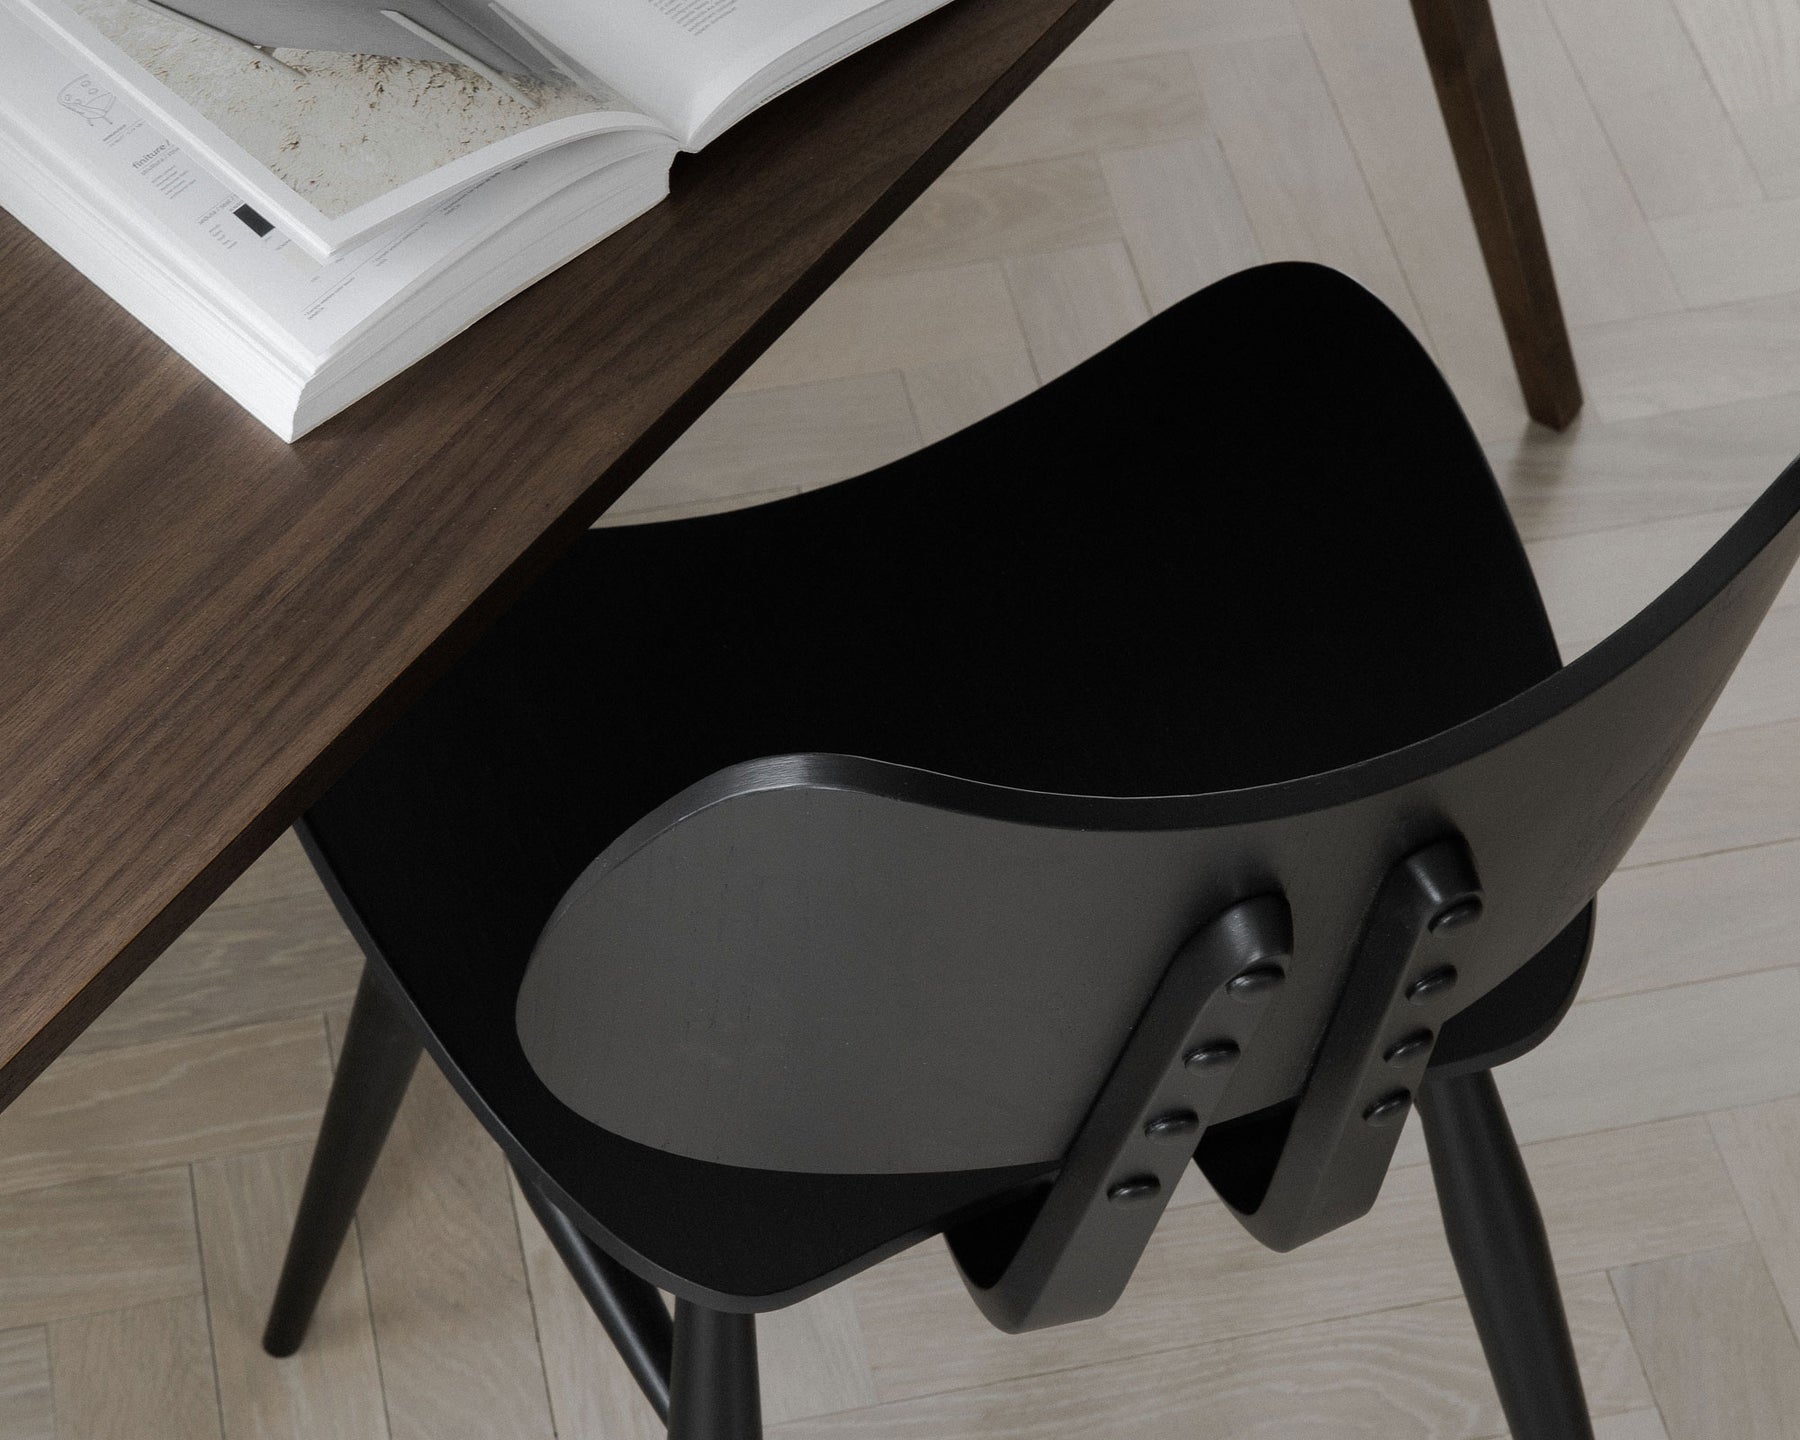 L Ercolani Furniture Design | DSHOP